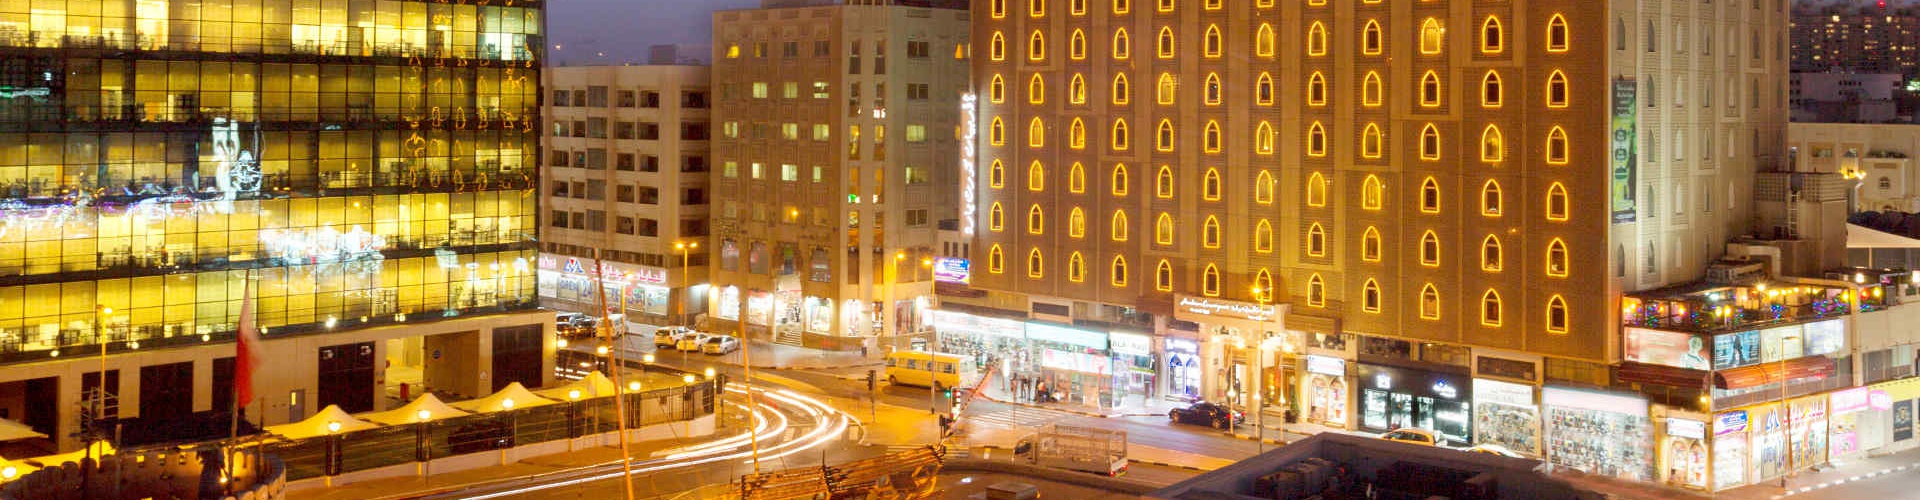 Arabian Courtyard Hotel & Spa rediseño2 - 迪拜酋长国 - 